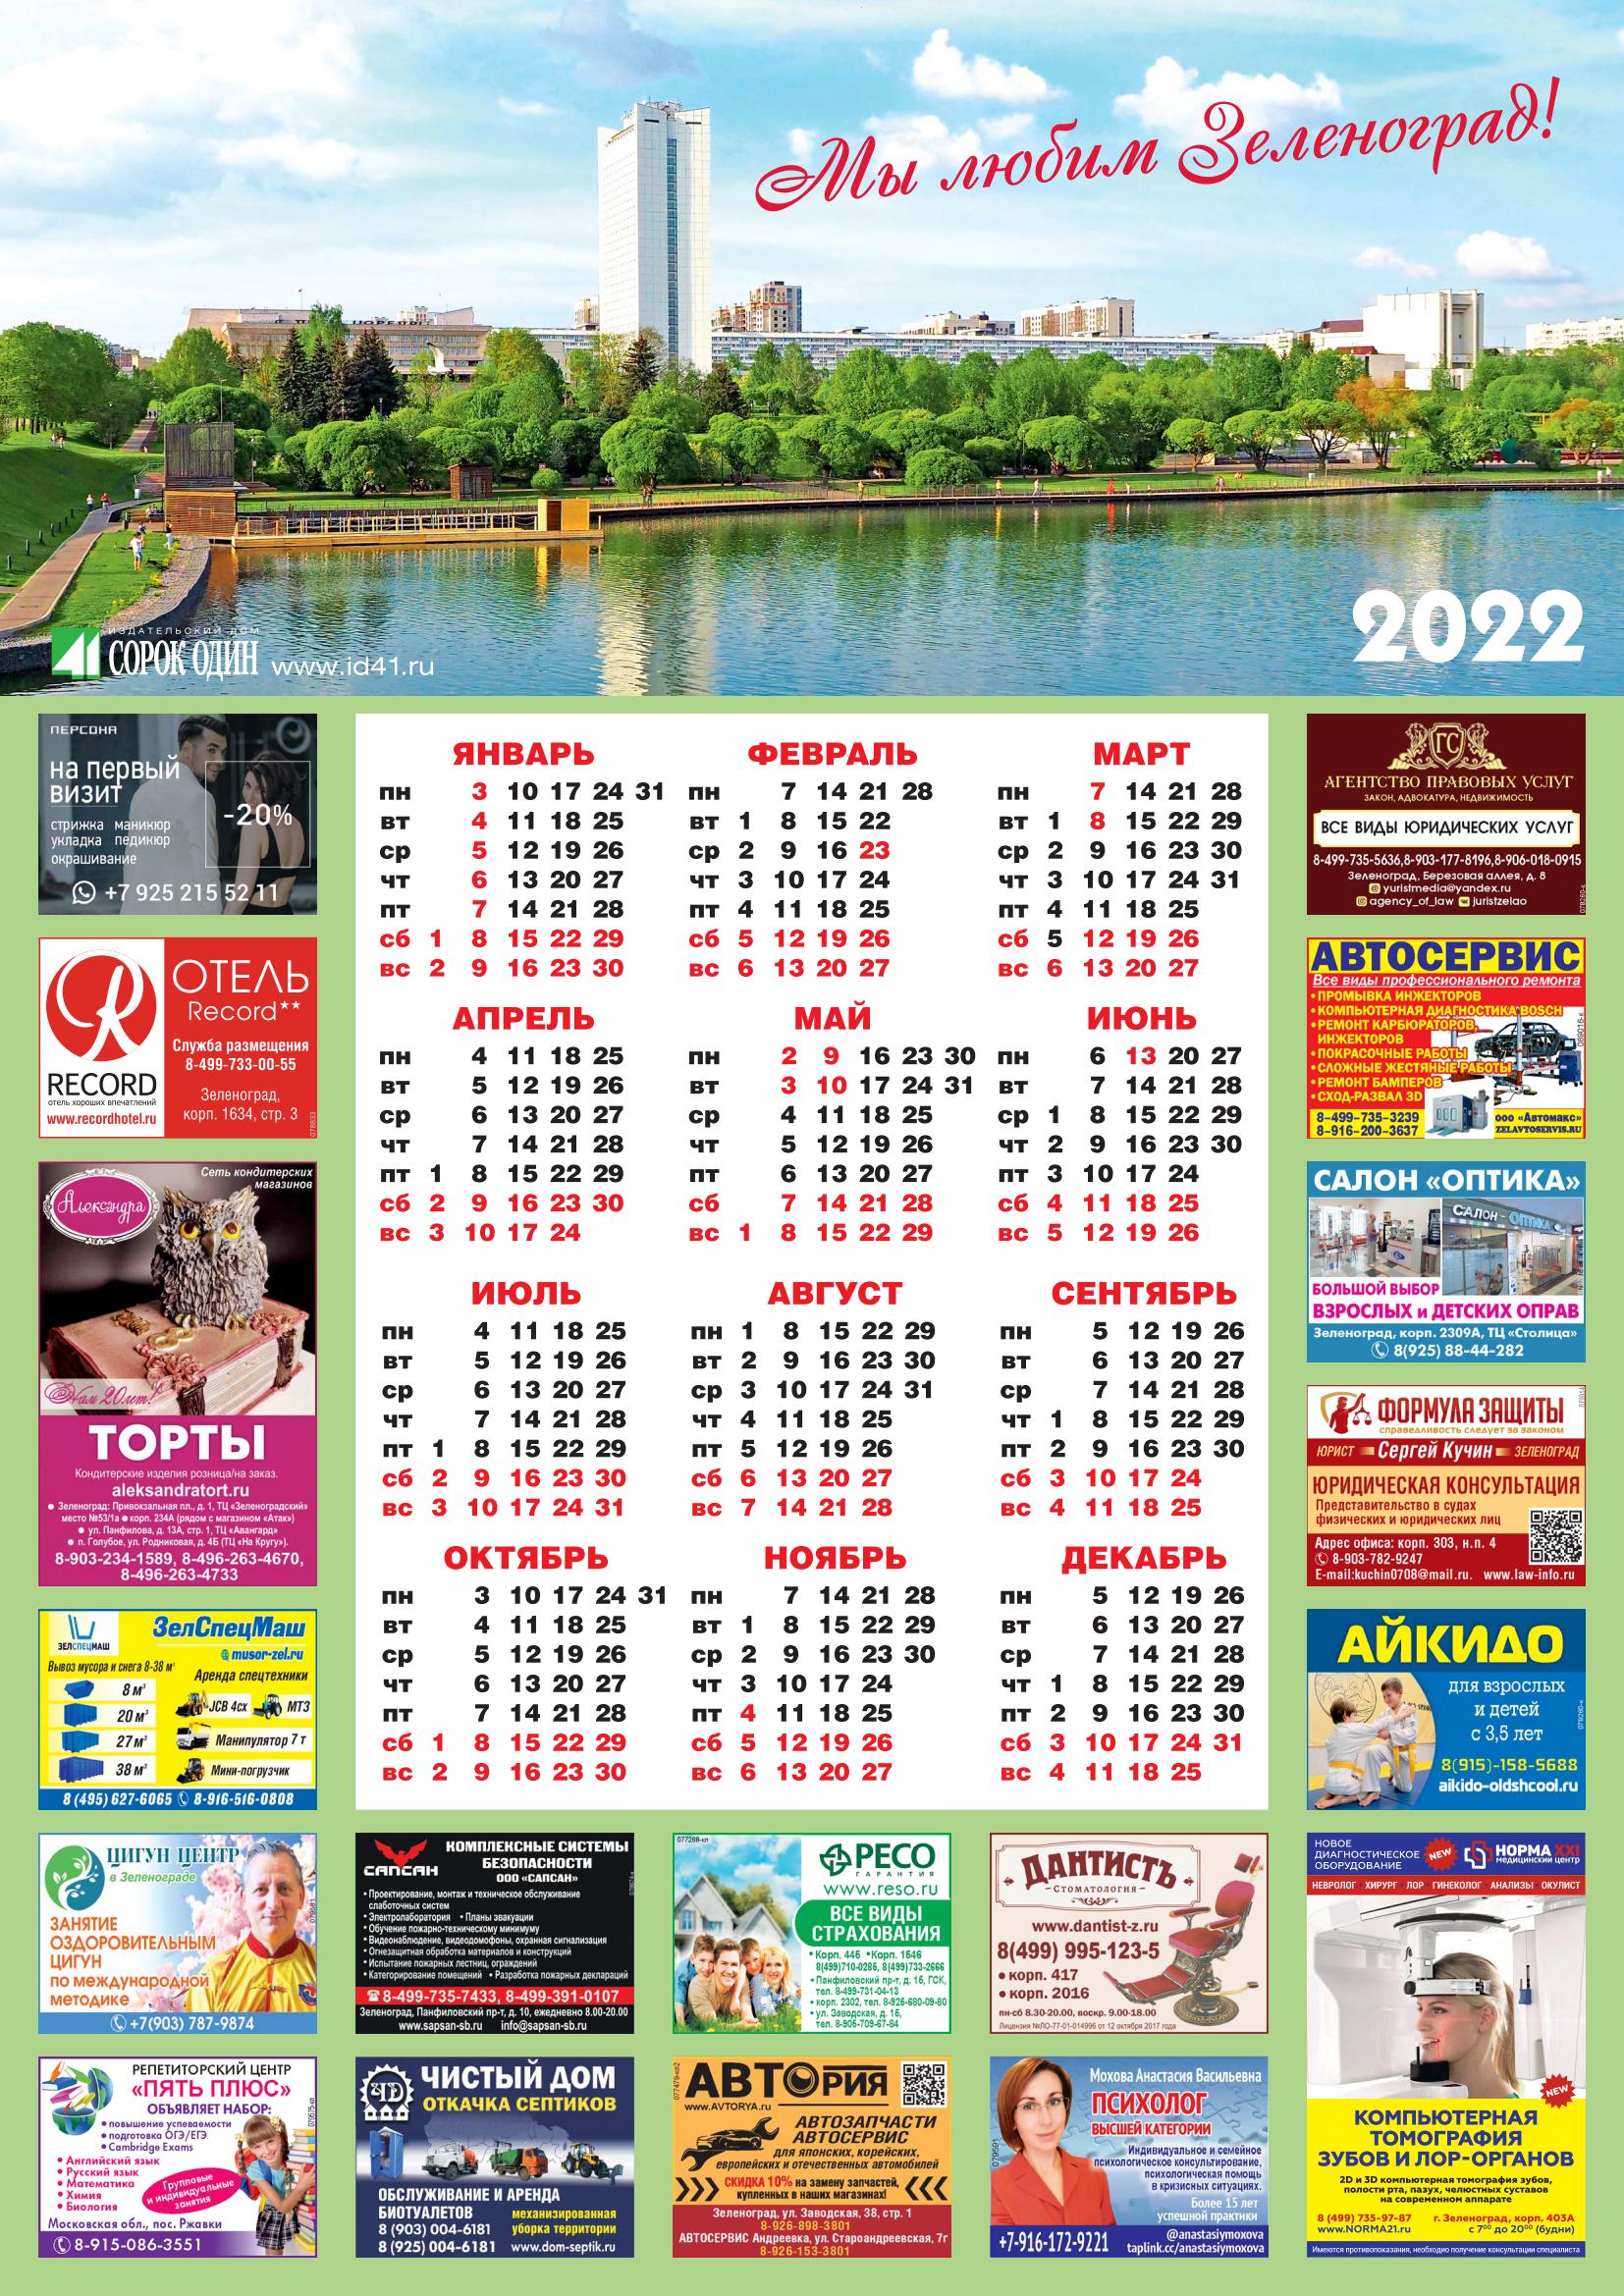 Календарь «Мы любим Зеленоград!» А2 2022